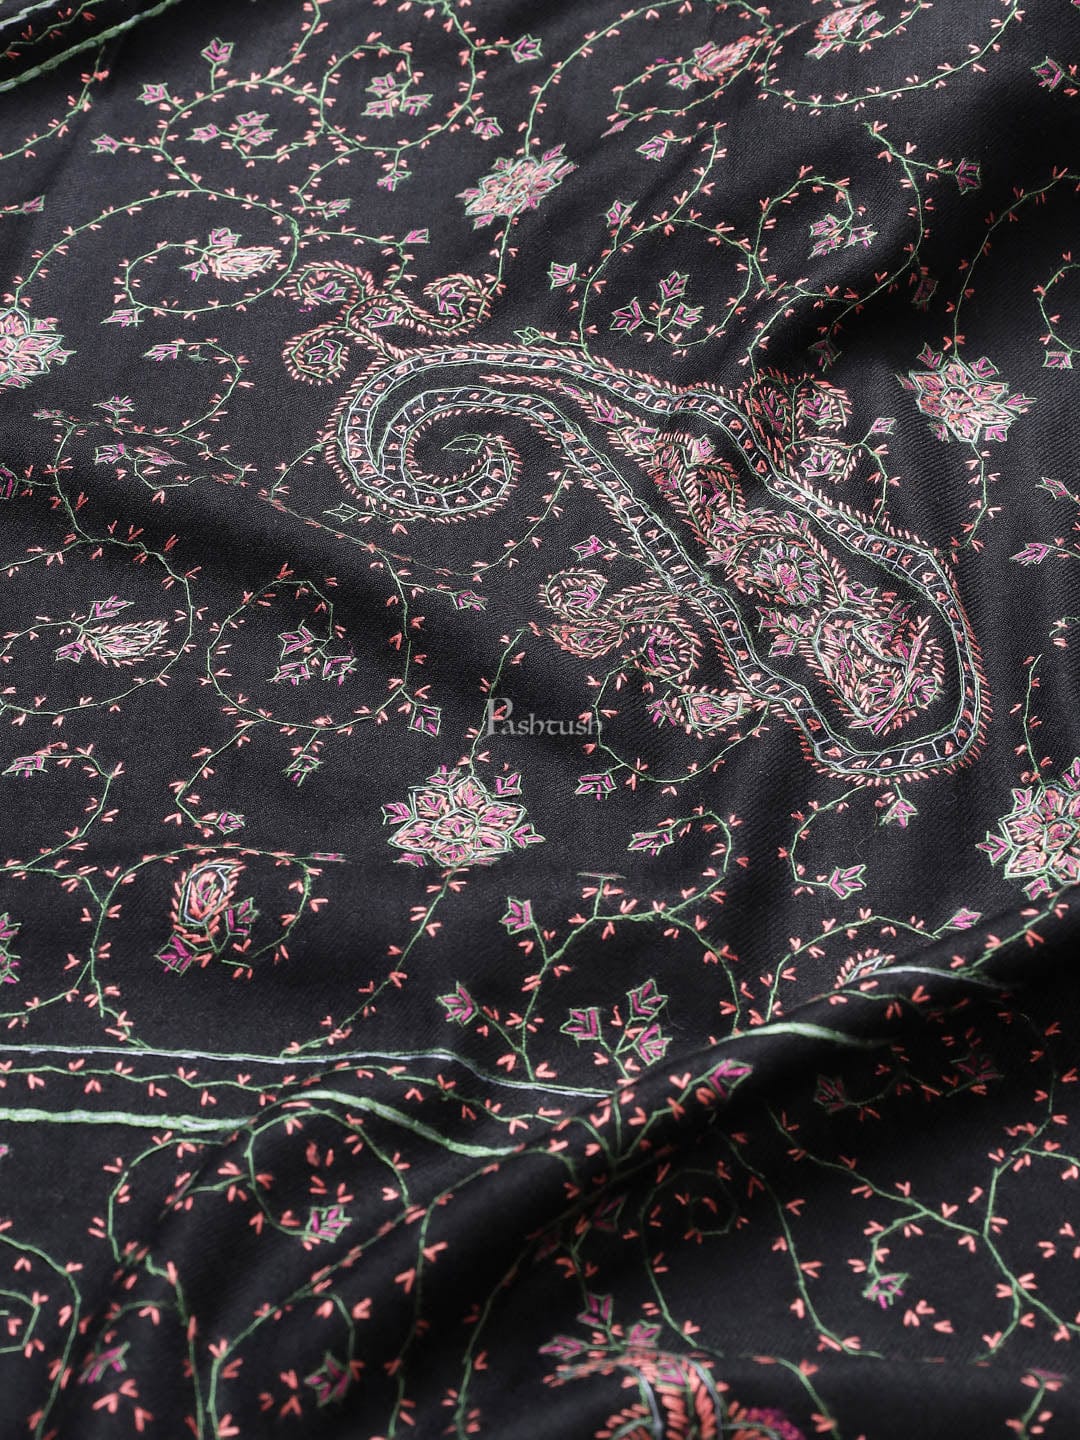 Pashtush India Womens Shawls Pashtush womens Fine Wool shawl, 100% hand embroidery  design, Black